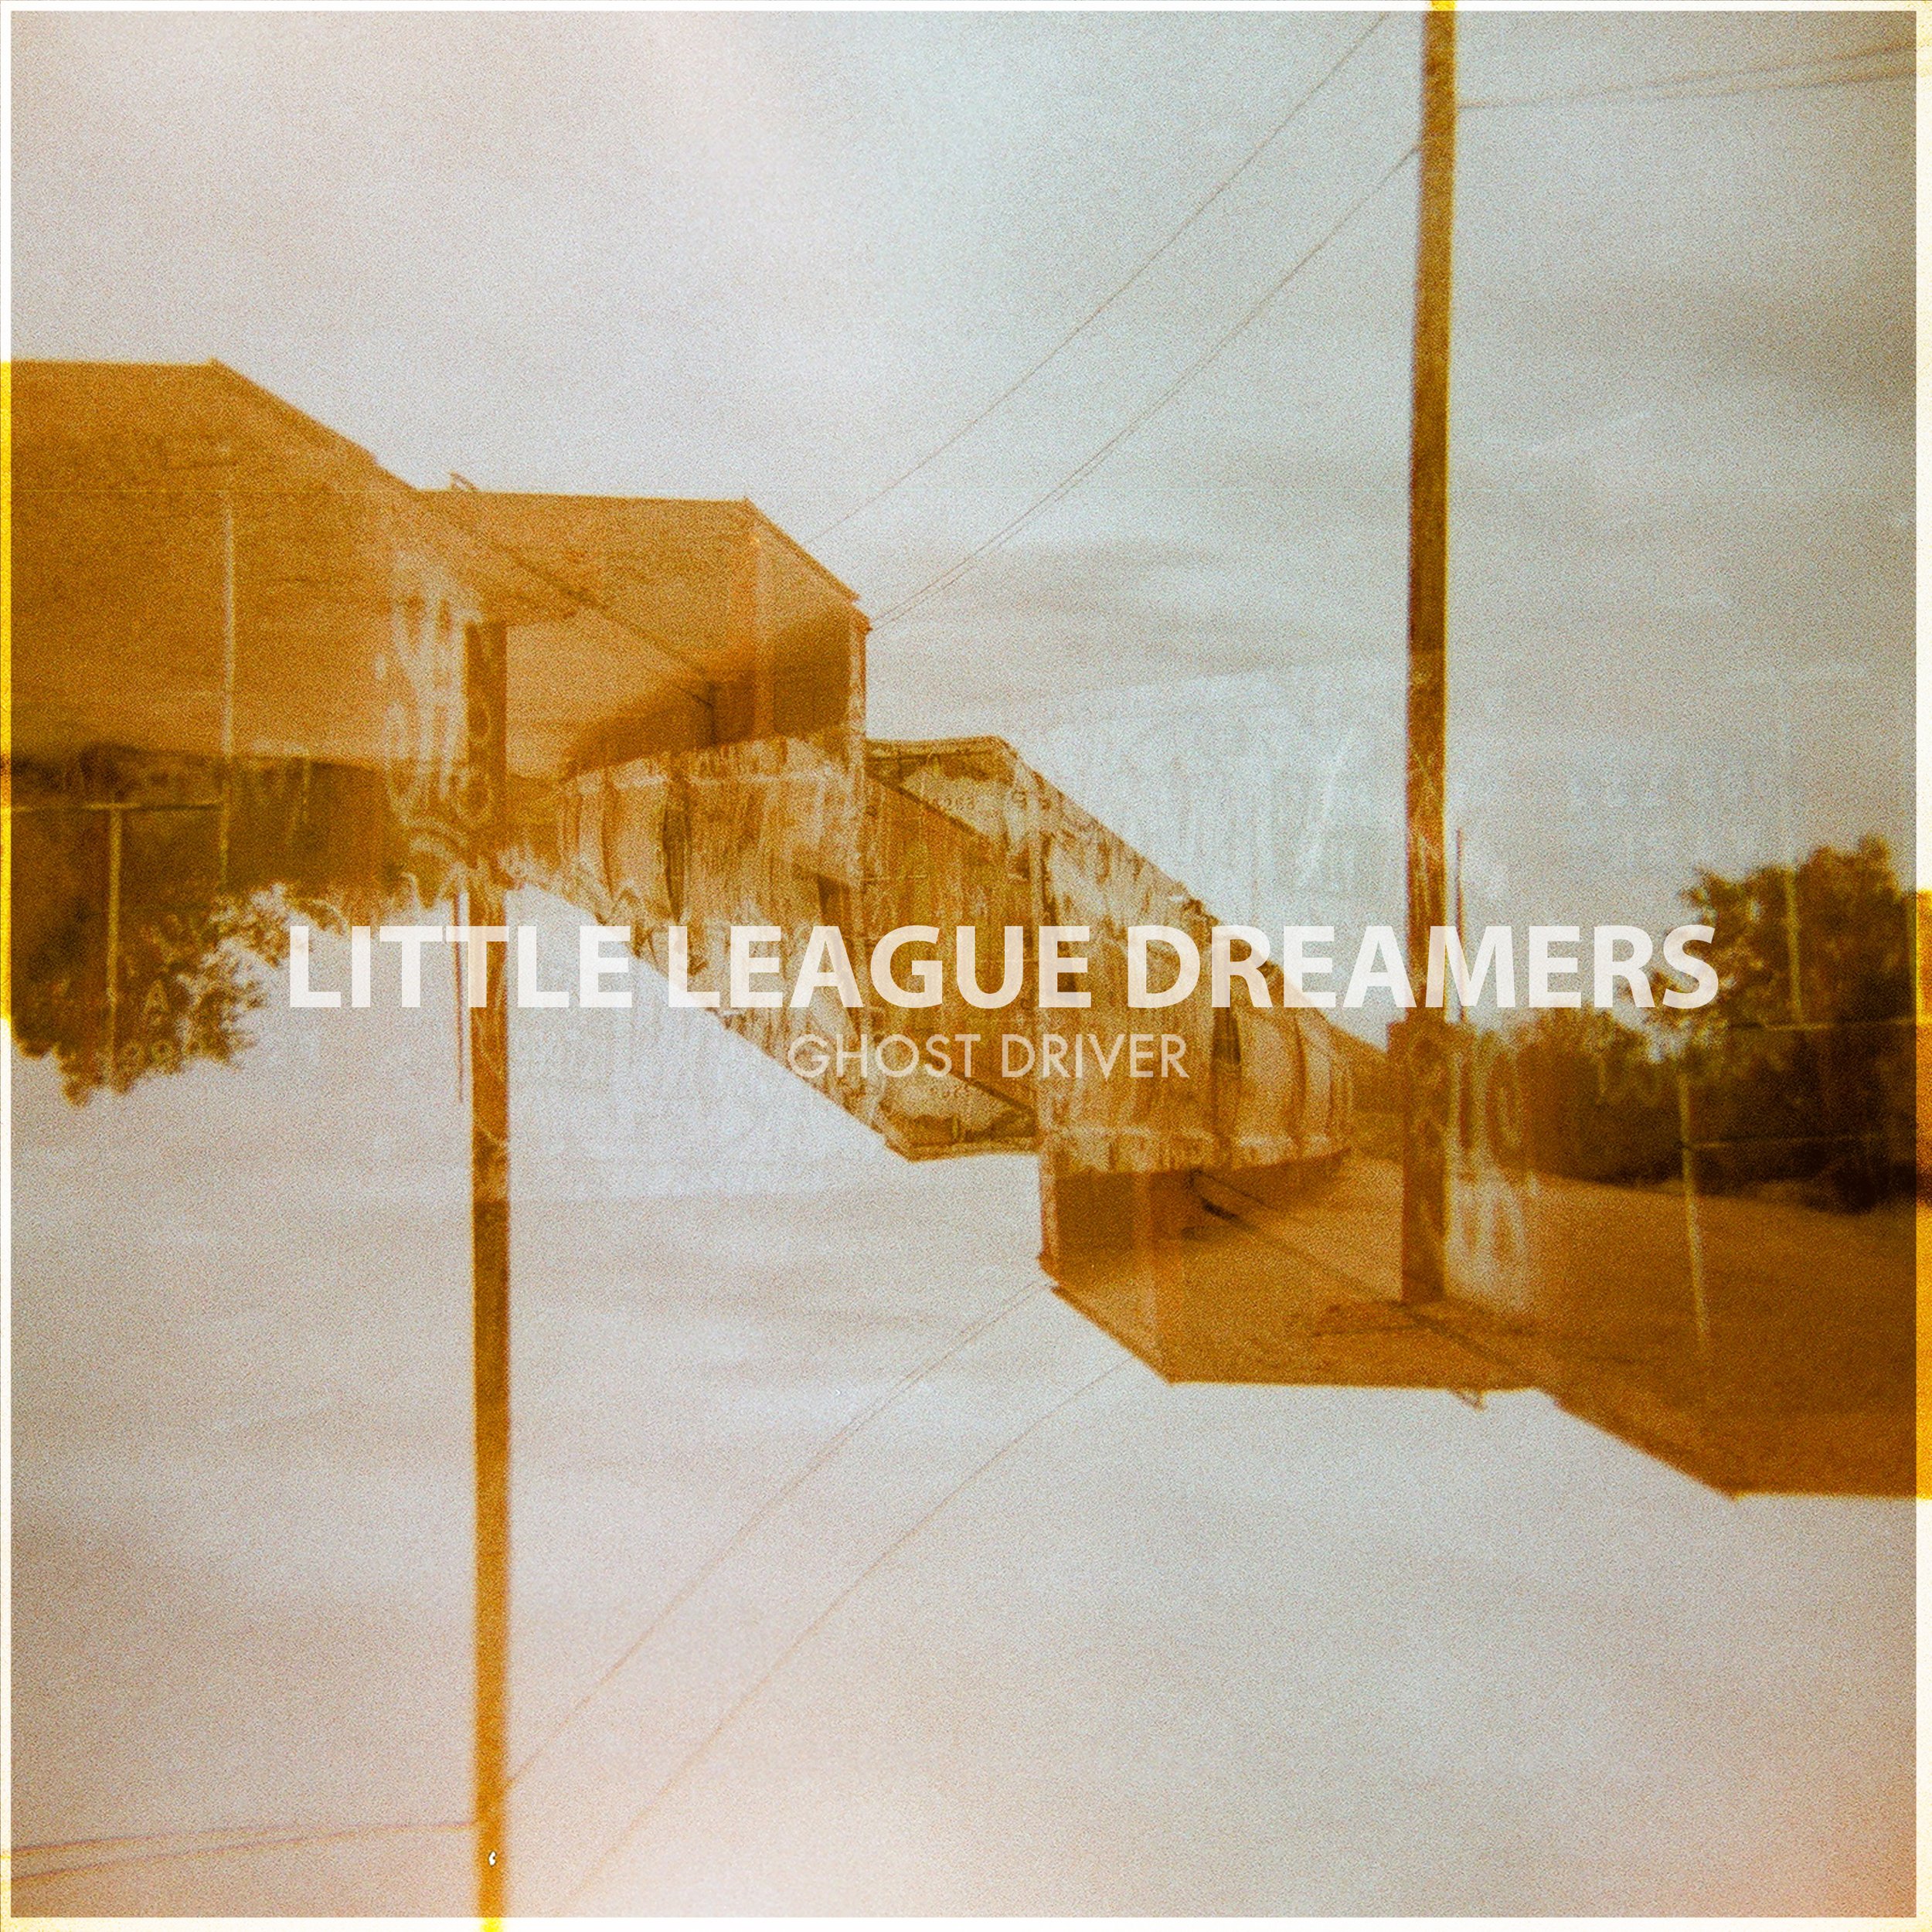 Little League Dreamers(Art)Ghost Driver.jpg